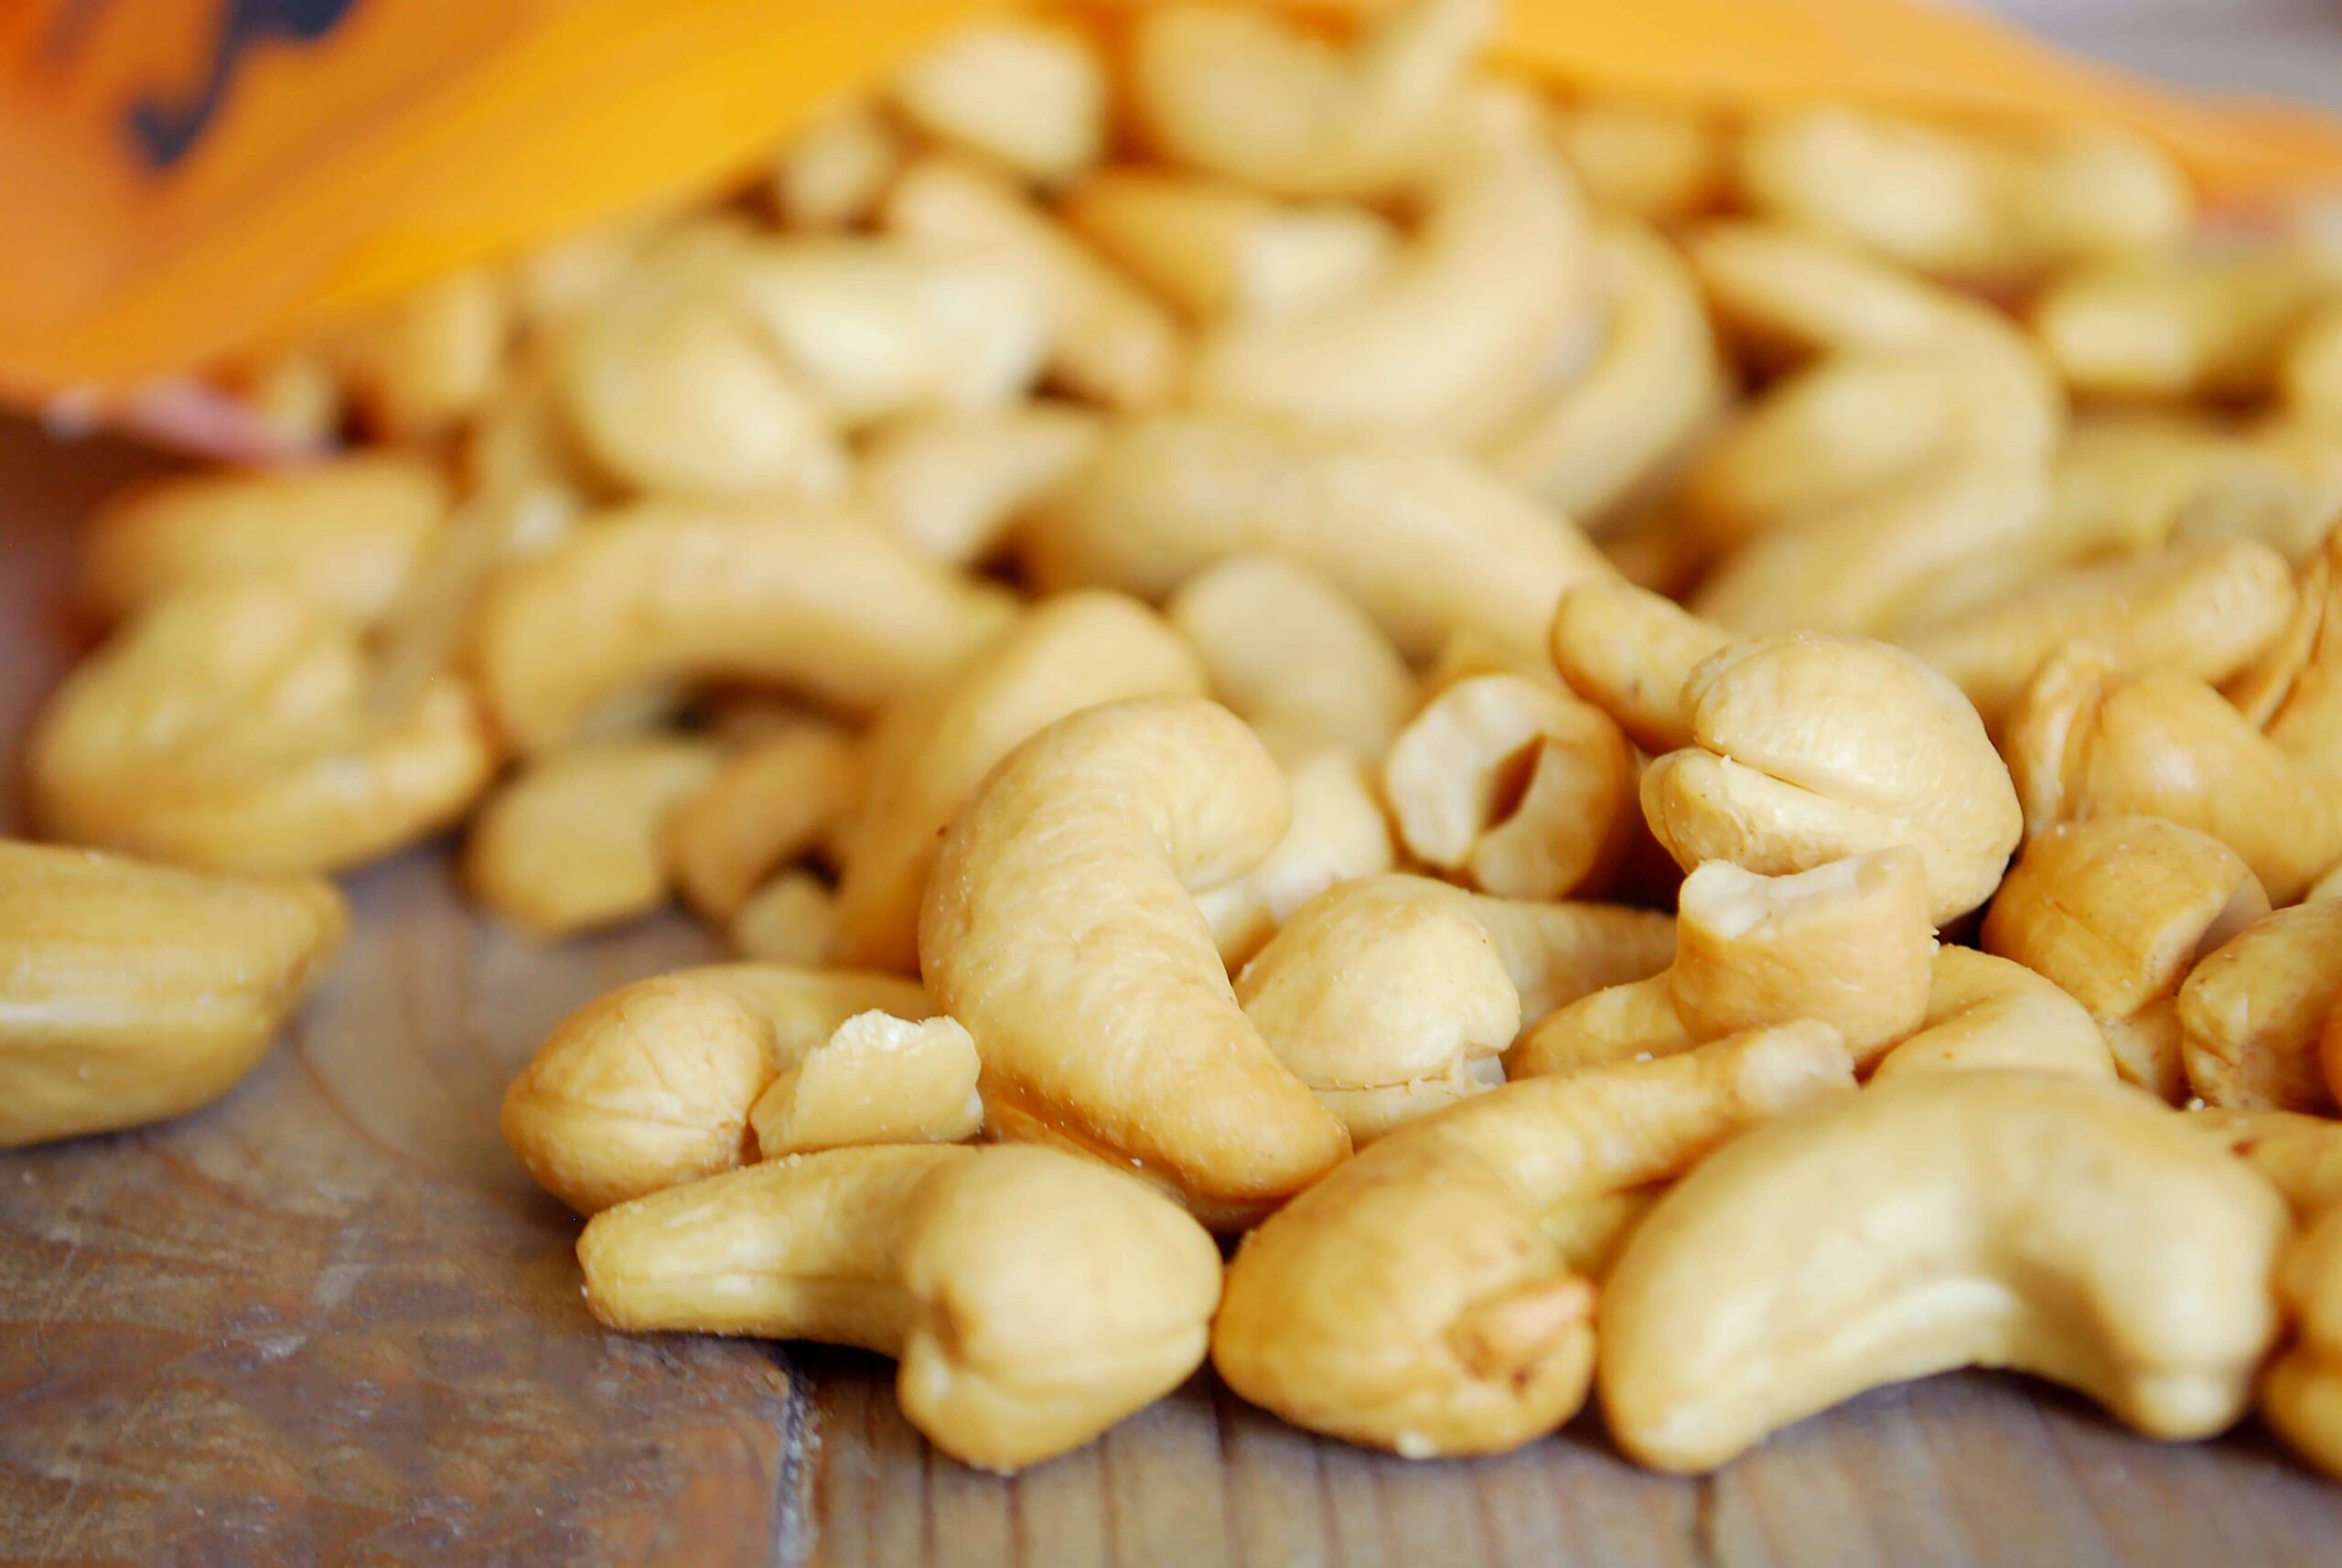 1 kg cashew price in India